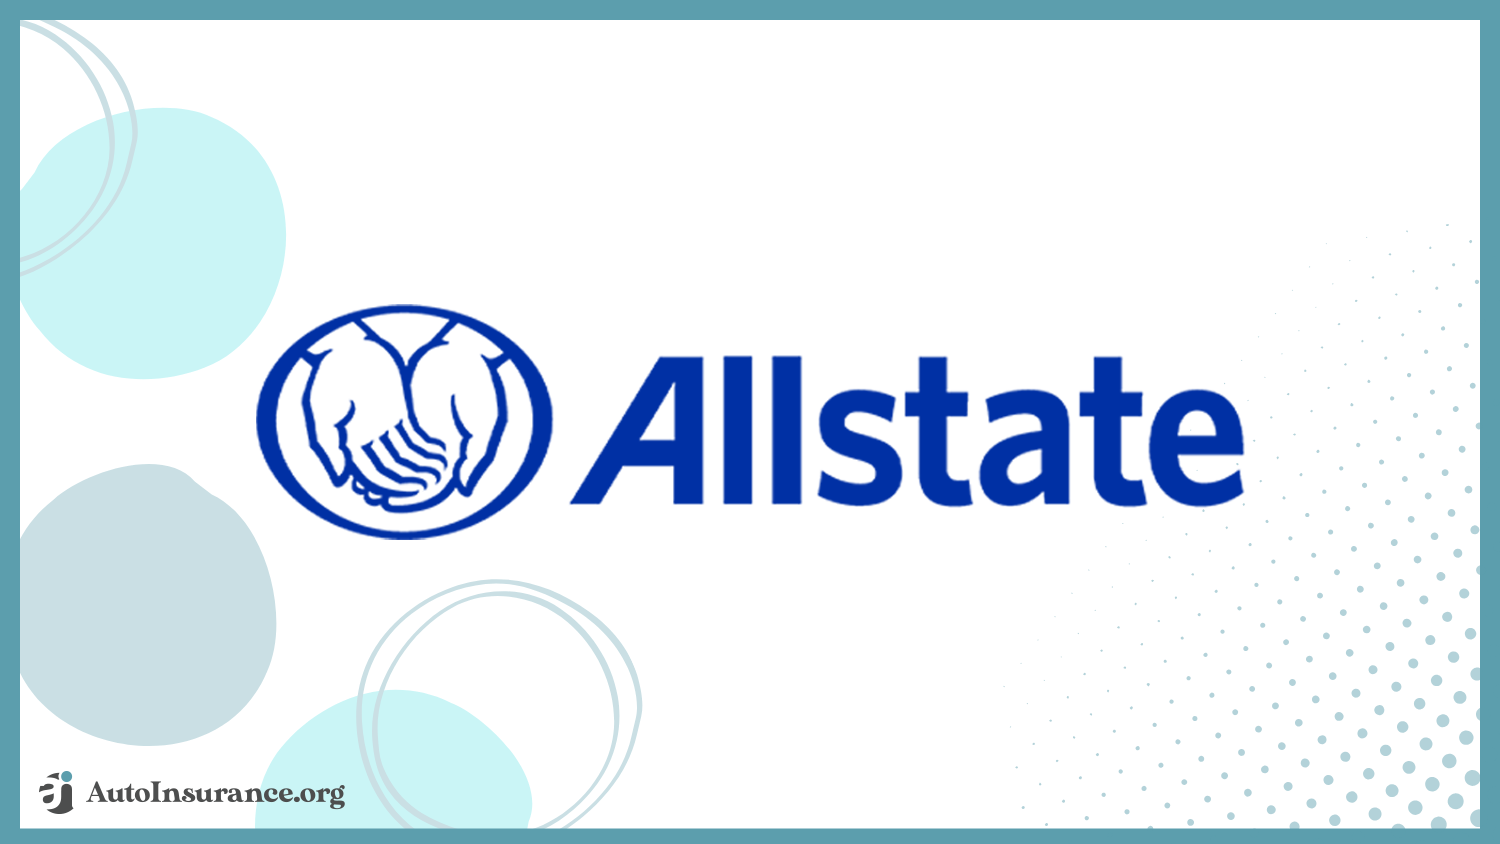 Allstate: Best Auto Insurance for Law Enforcement